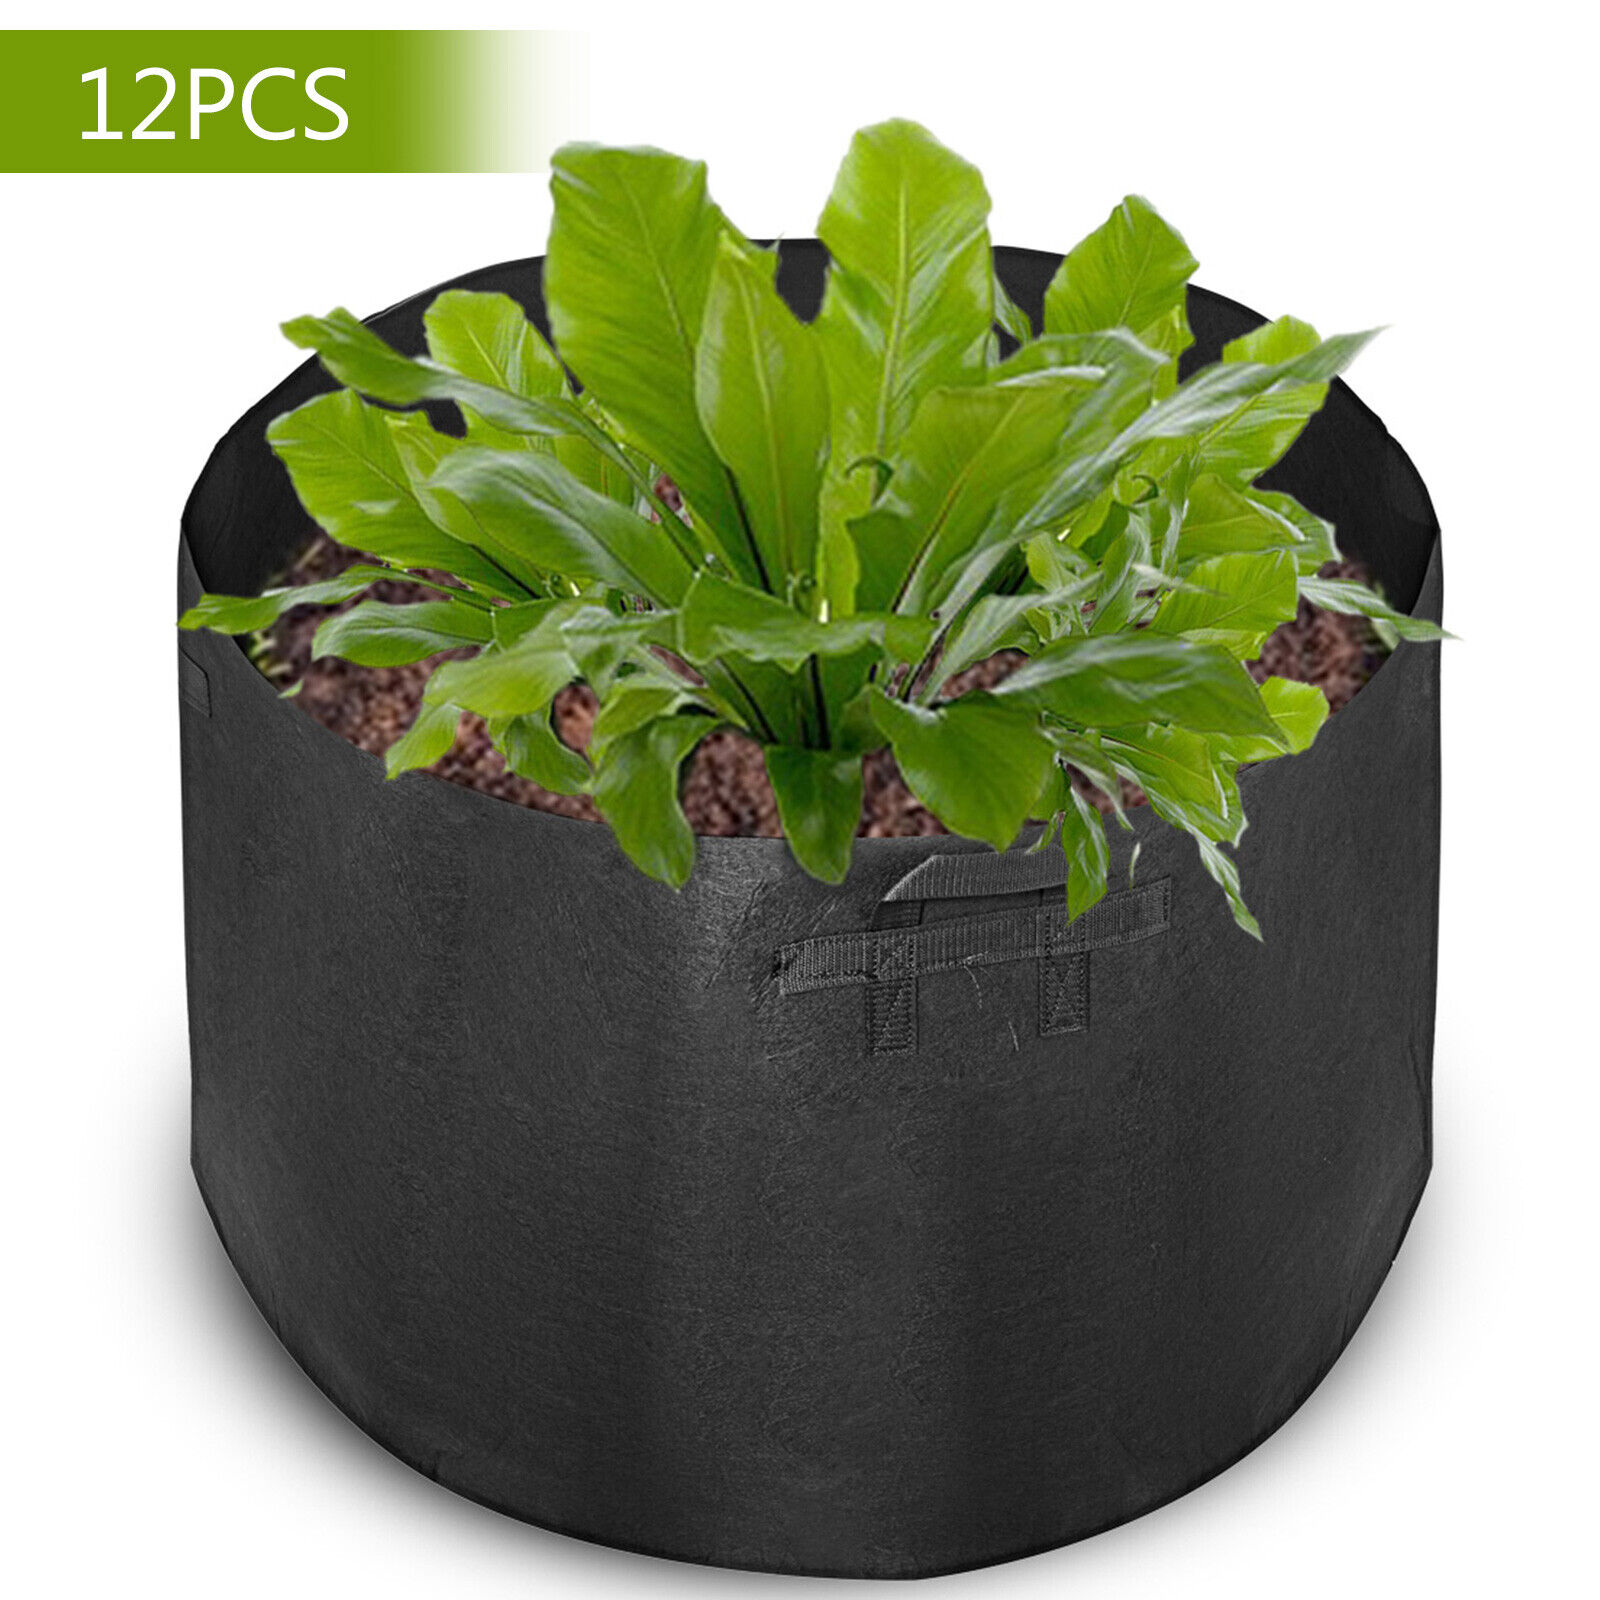 VEVOR Plant Grow Bag Aeration Fabric Pots 12-Pack 65 Gallon with Handles Black